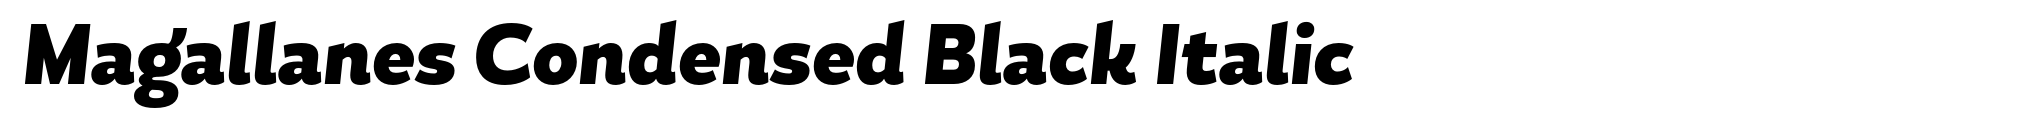 Magallanes Condensed Black Italic image